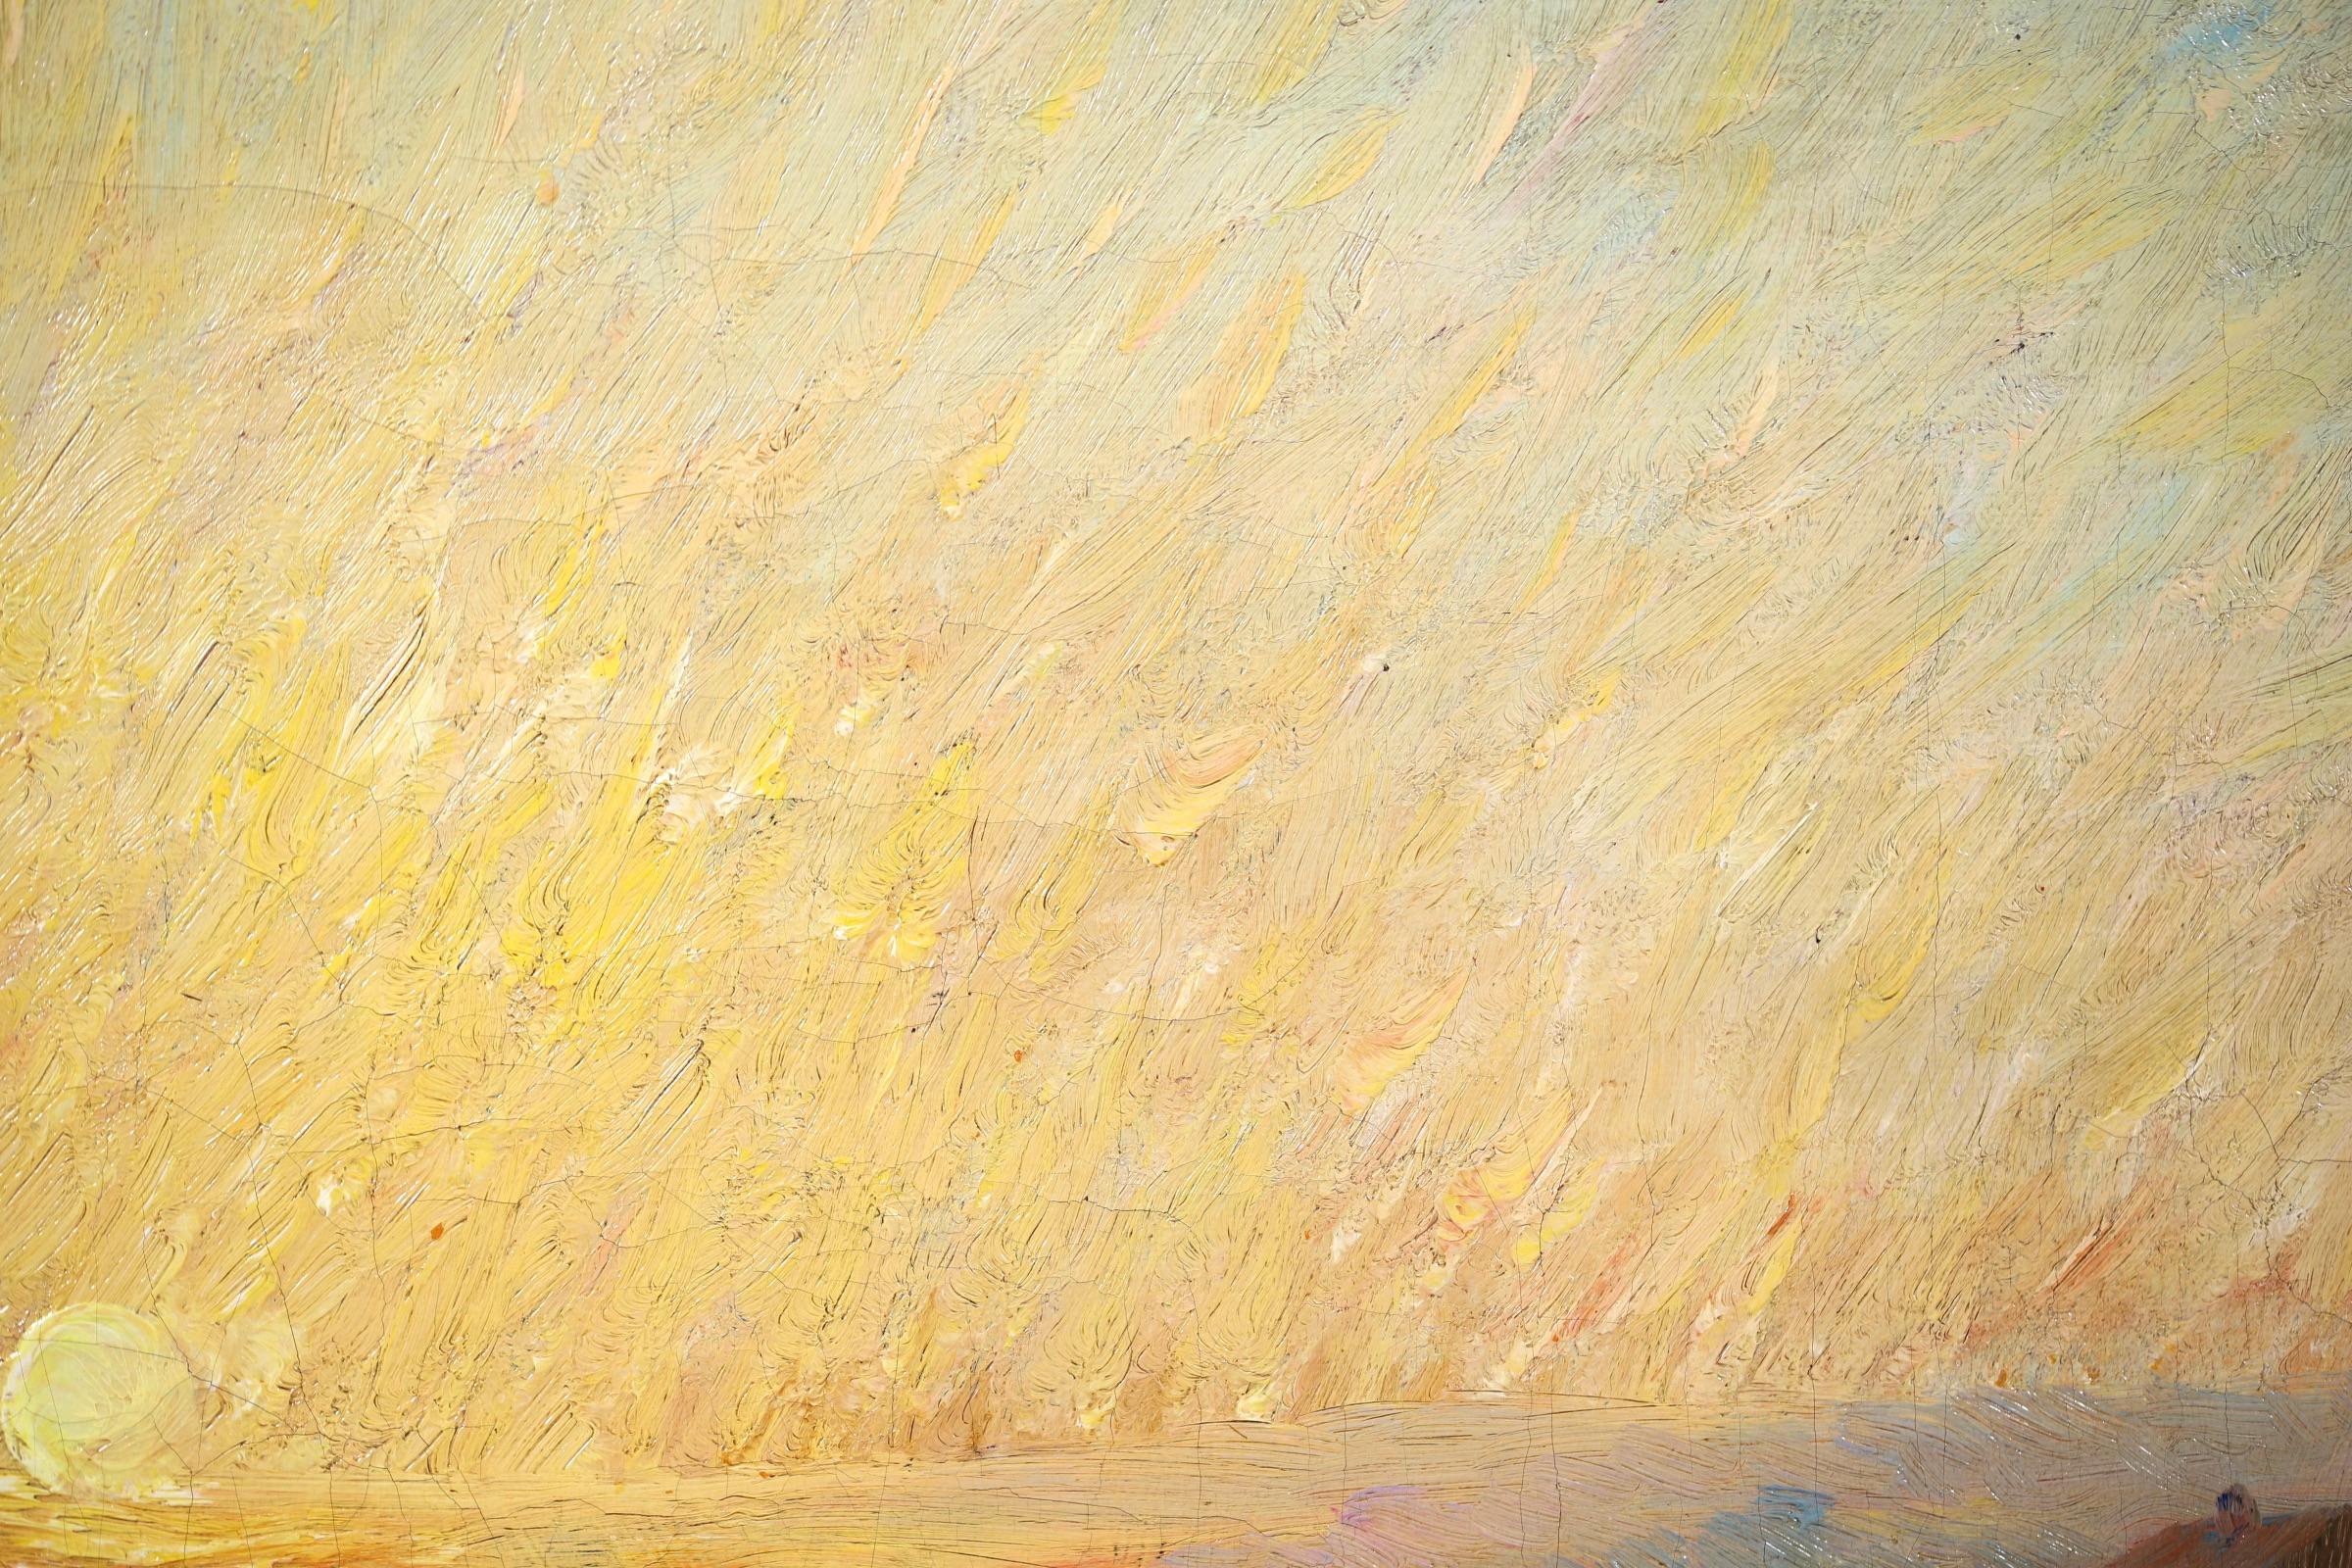 Soleil Couchant - Post Impressionist Landscape Oil by Adolphe Louis Gaussen 6